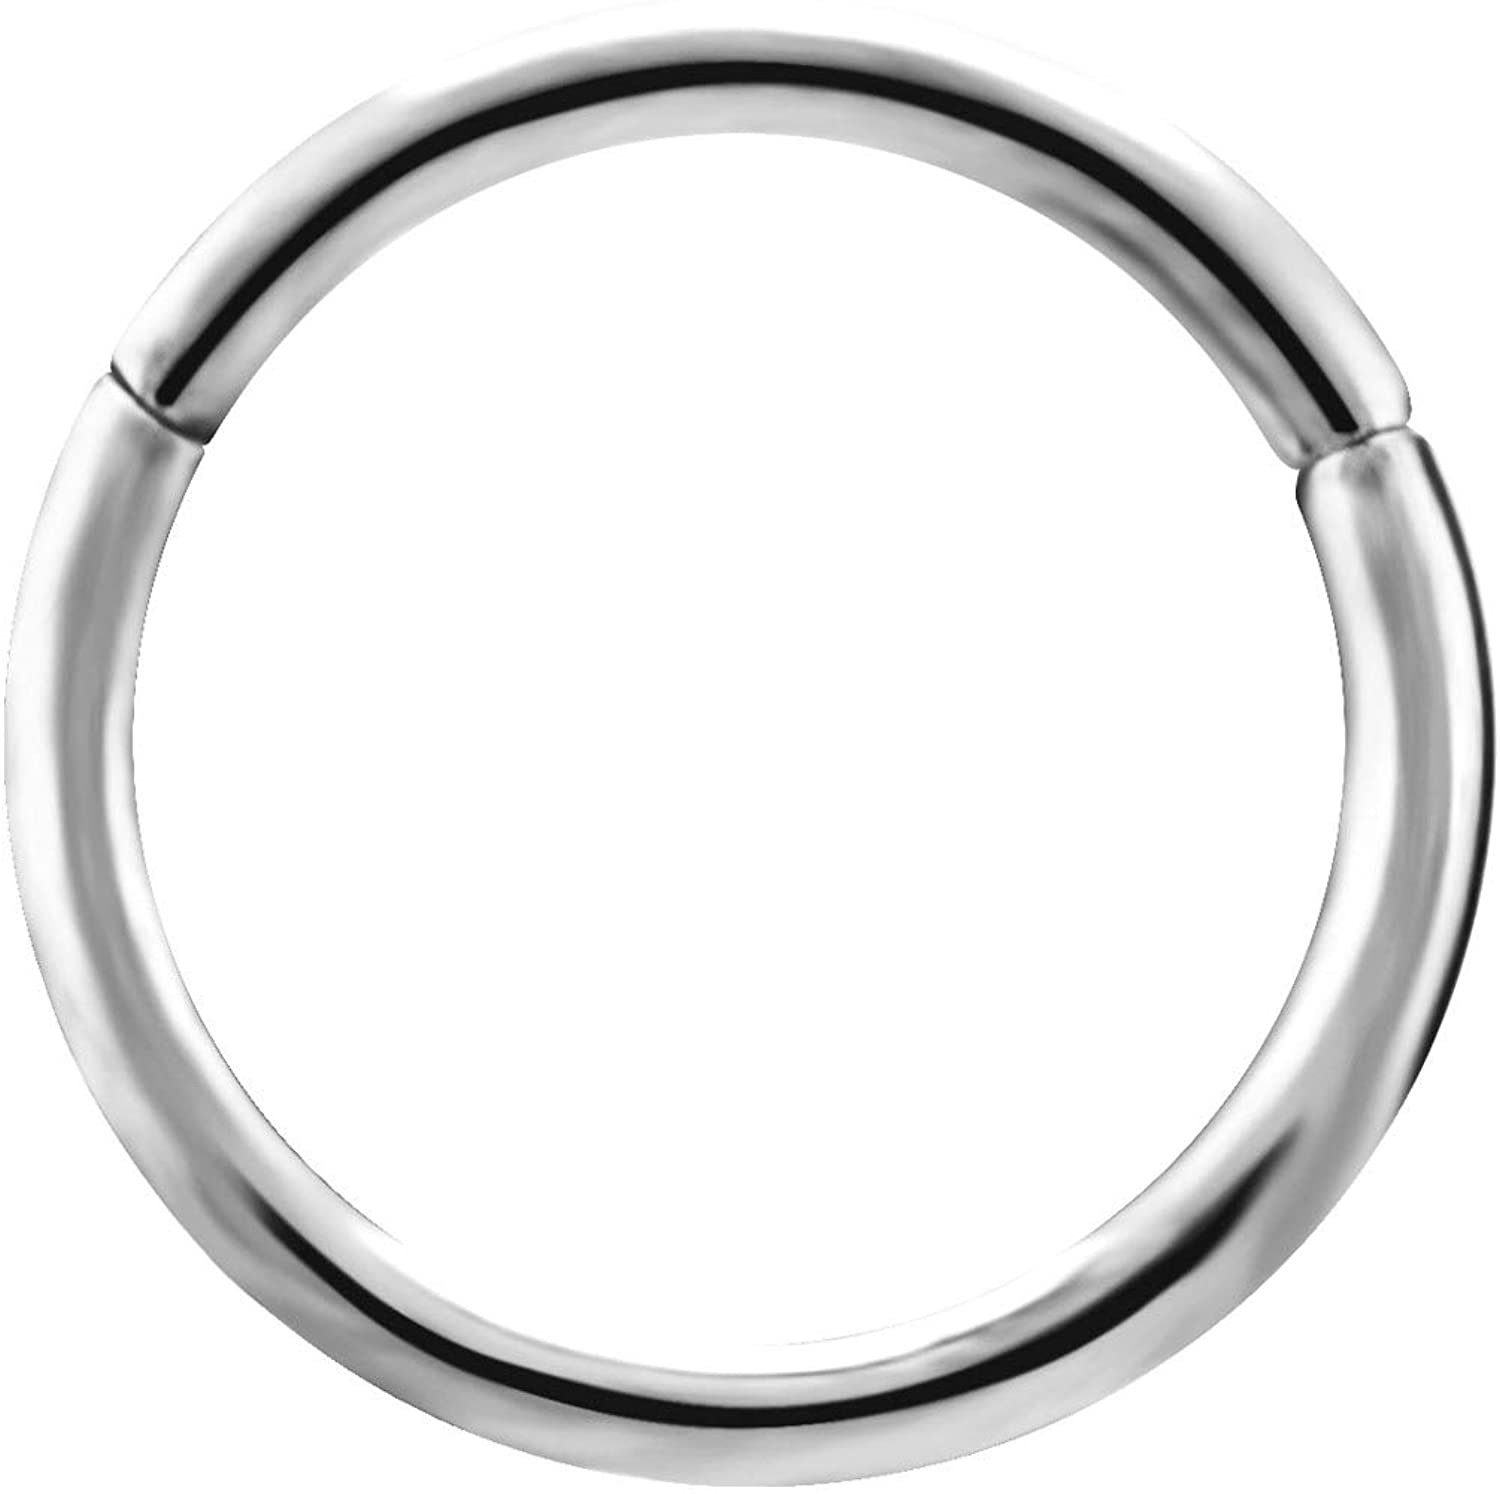 Hinged Silber Karisma G23 Helix Segmentring Ohrring Clicker Charnier/Septum Titan Ring Piercing 1,0x8mm Nasenpiercing -